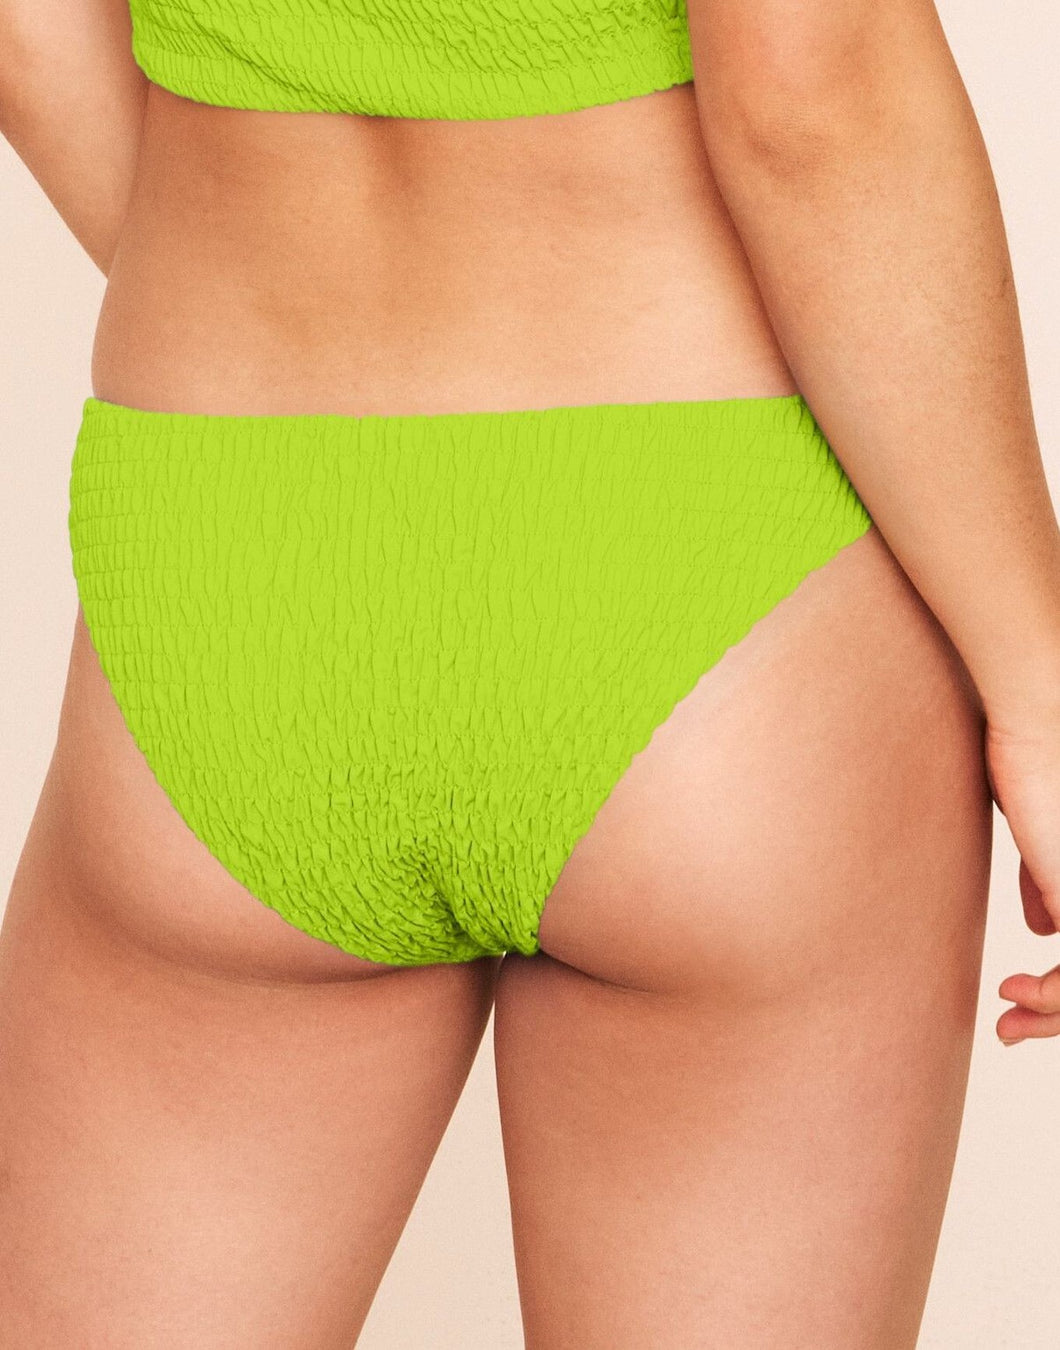 Earth Republic Hallie Smocking V Bottom V-Shaped Bikini in color Acid Lime and shape bikini